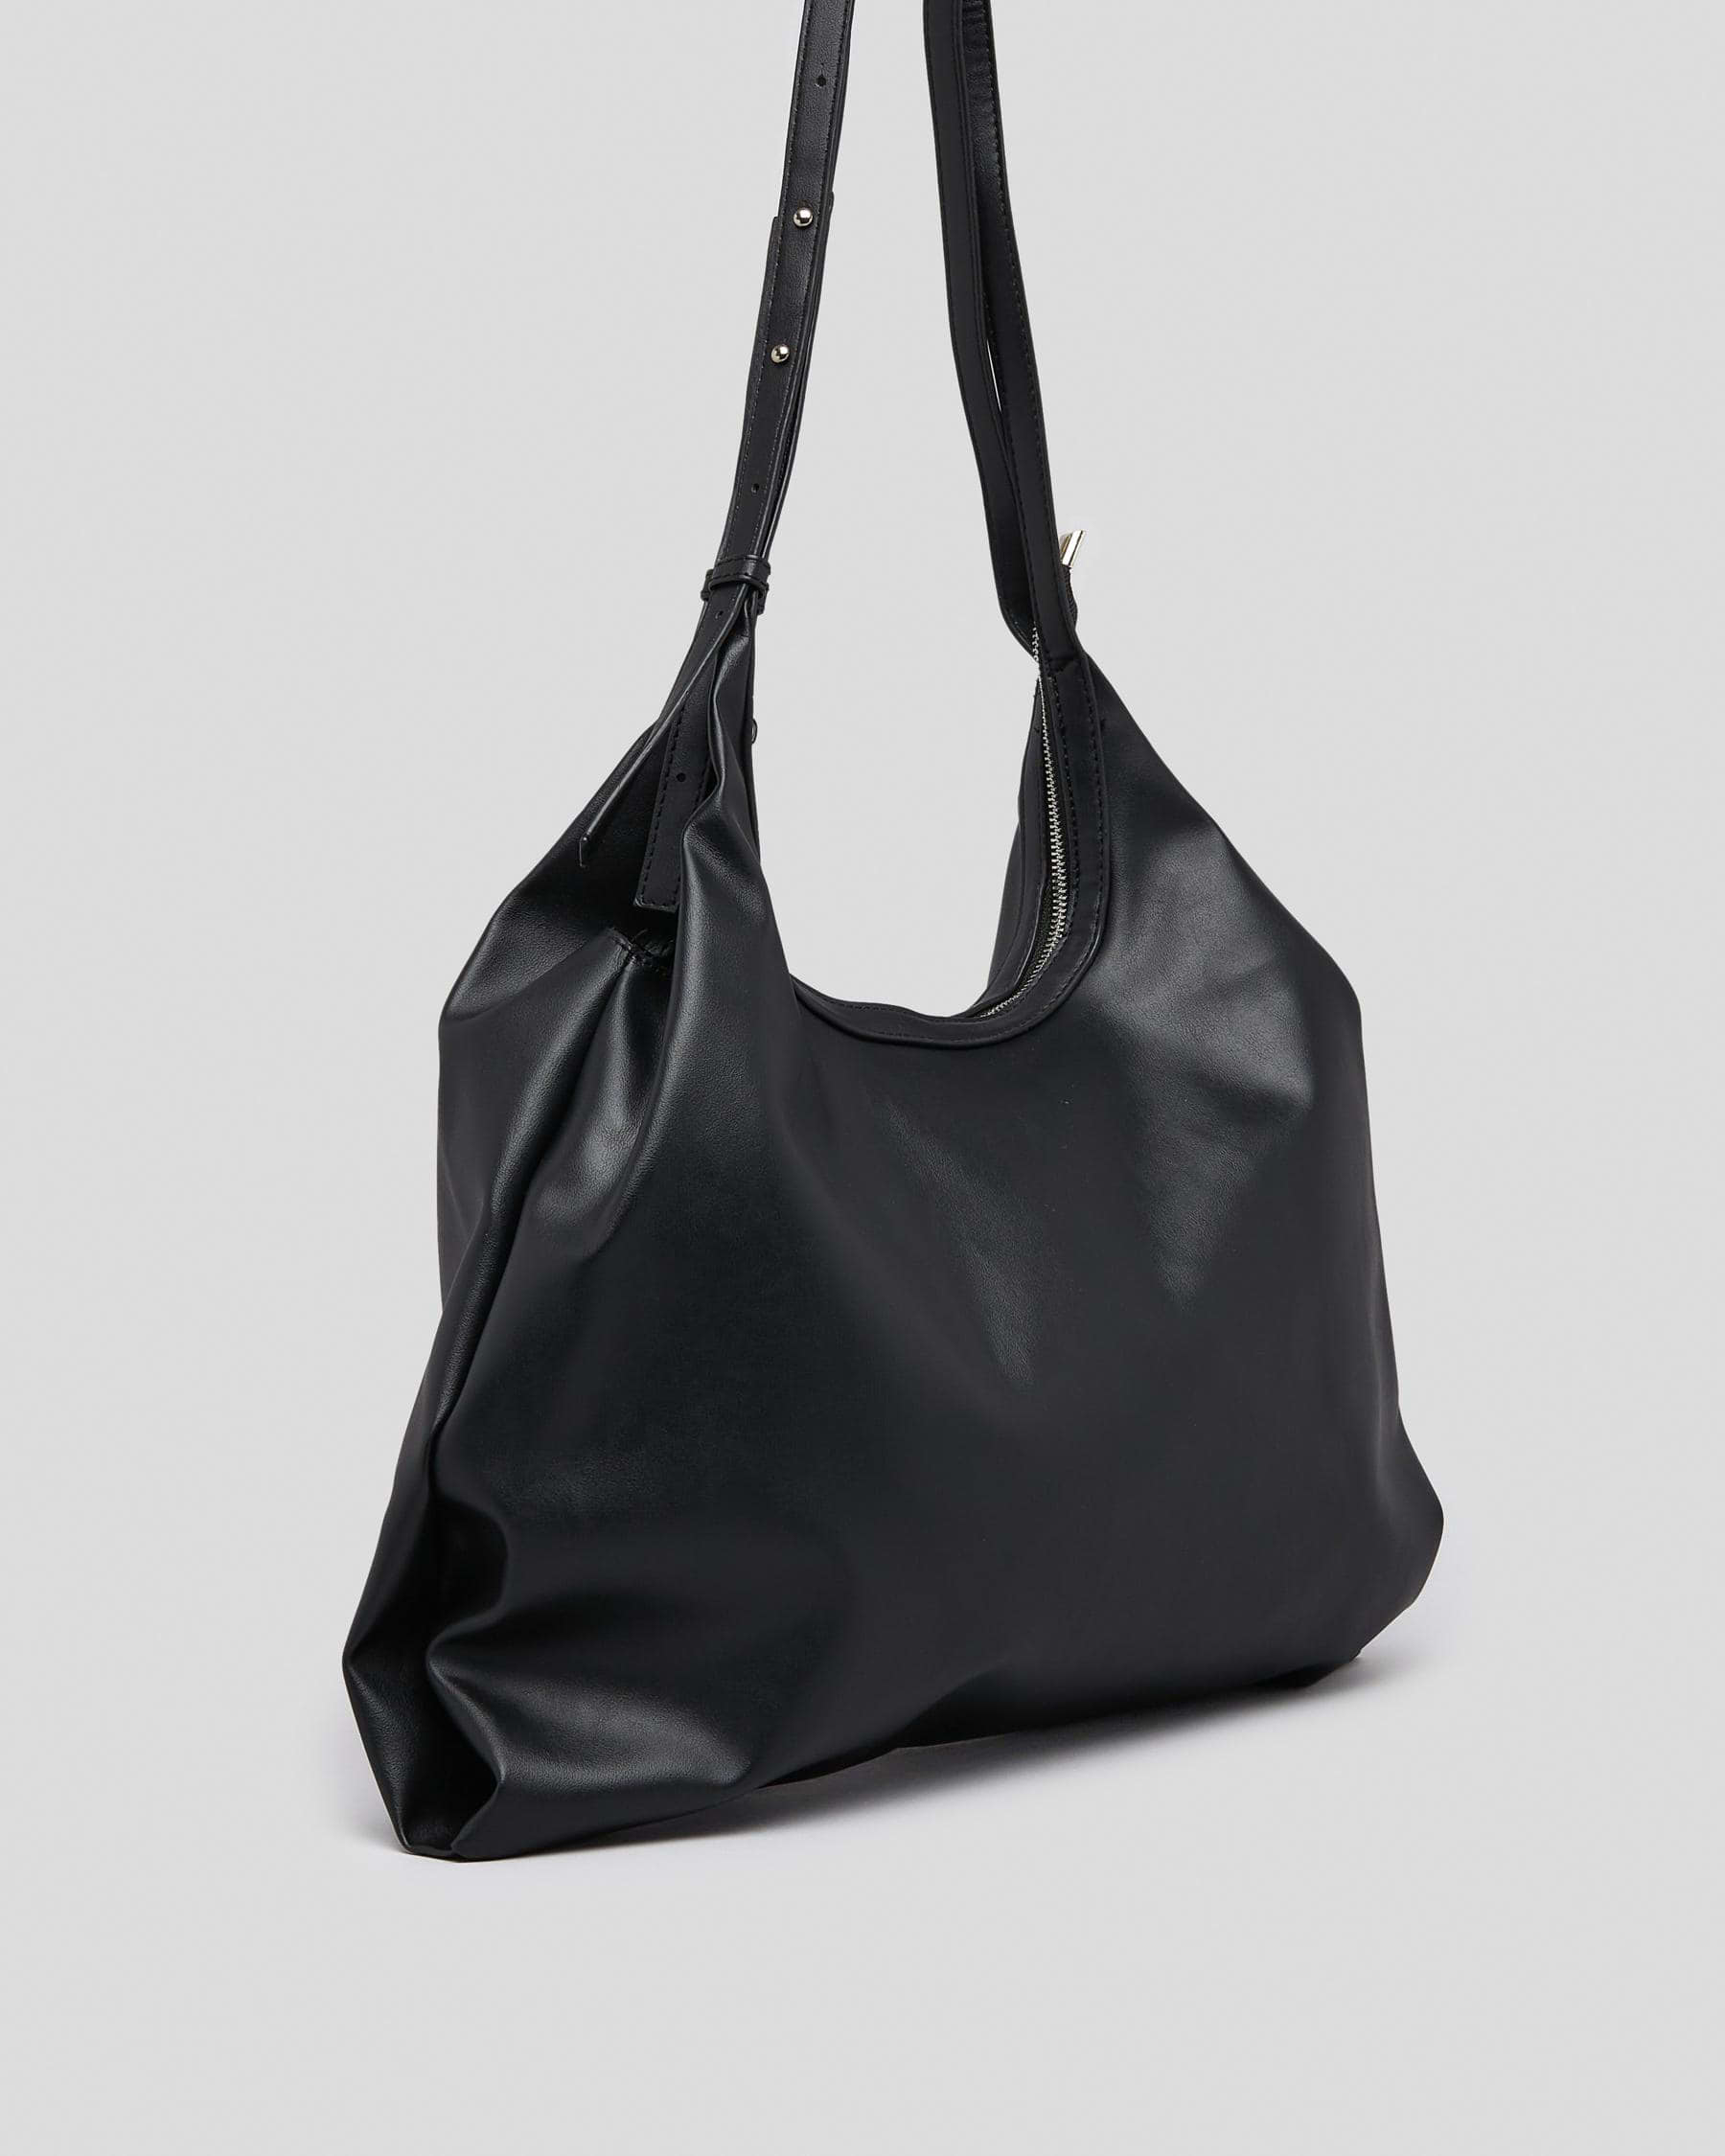 Ava And Ever Anna Handbag In Black - Fast Shipping & Easy Returns ...